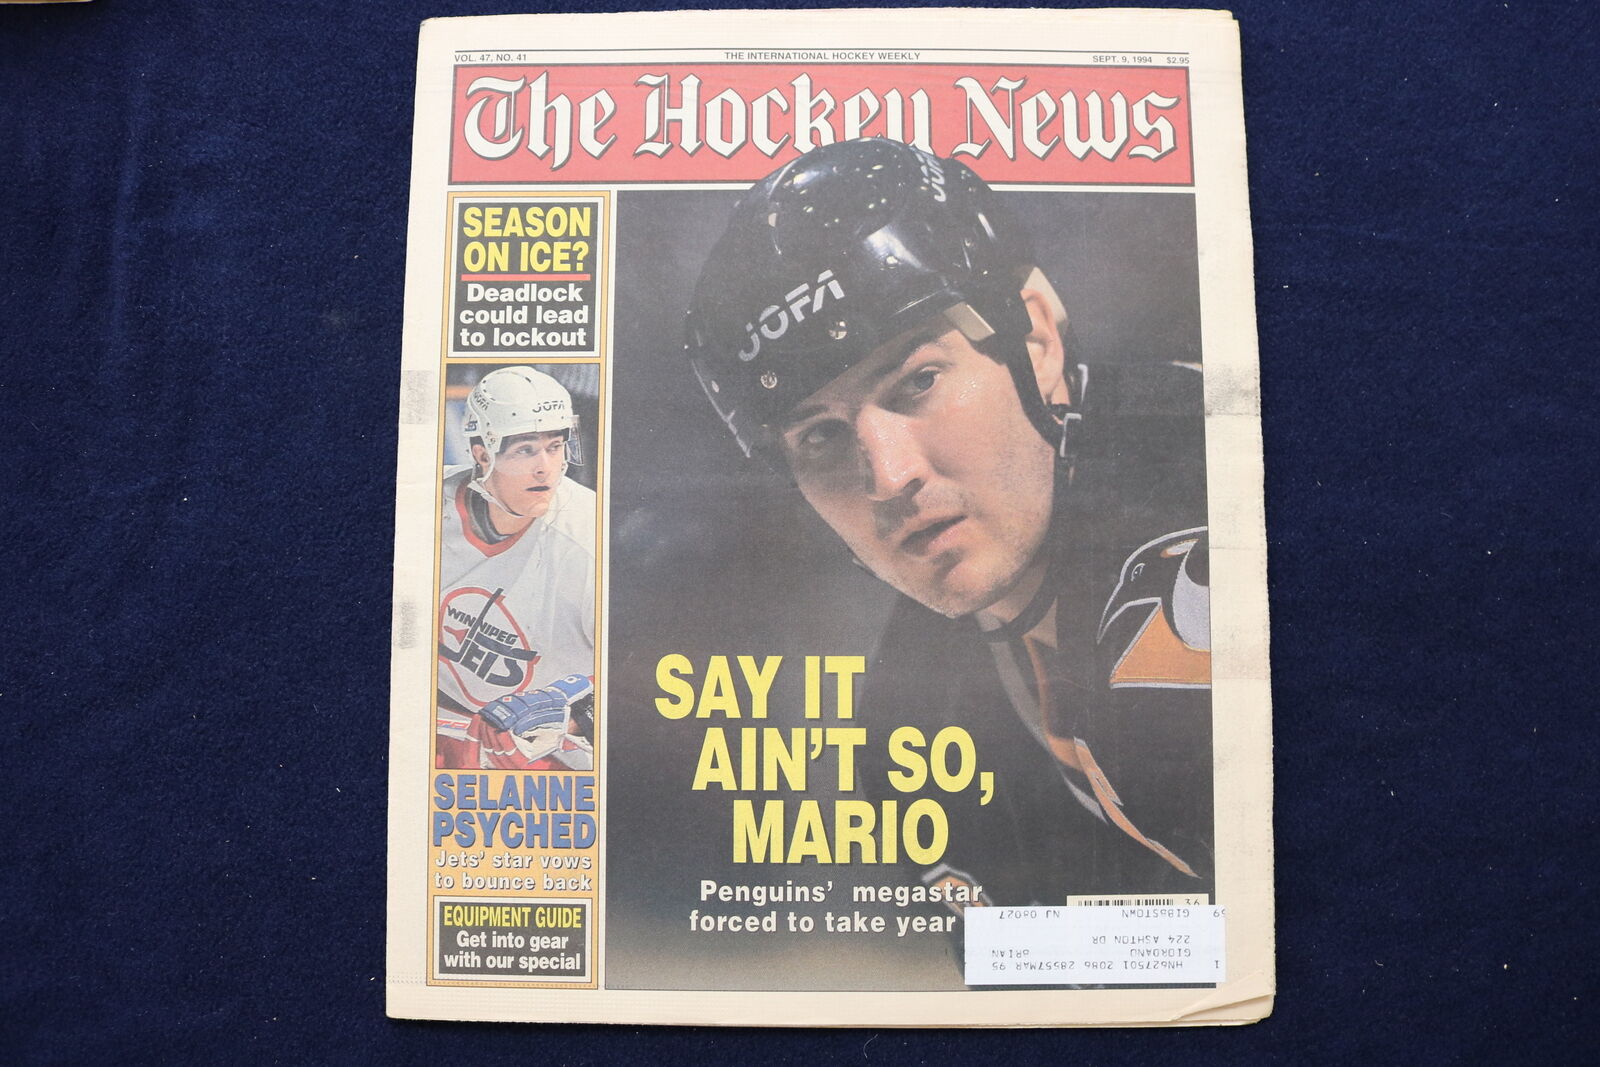 1994 SEPTEMBER 9 THE HOCKEY NEWS NEWSPAPER - MARIO LEMIEUX COVER - NP 8716